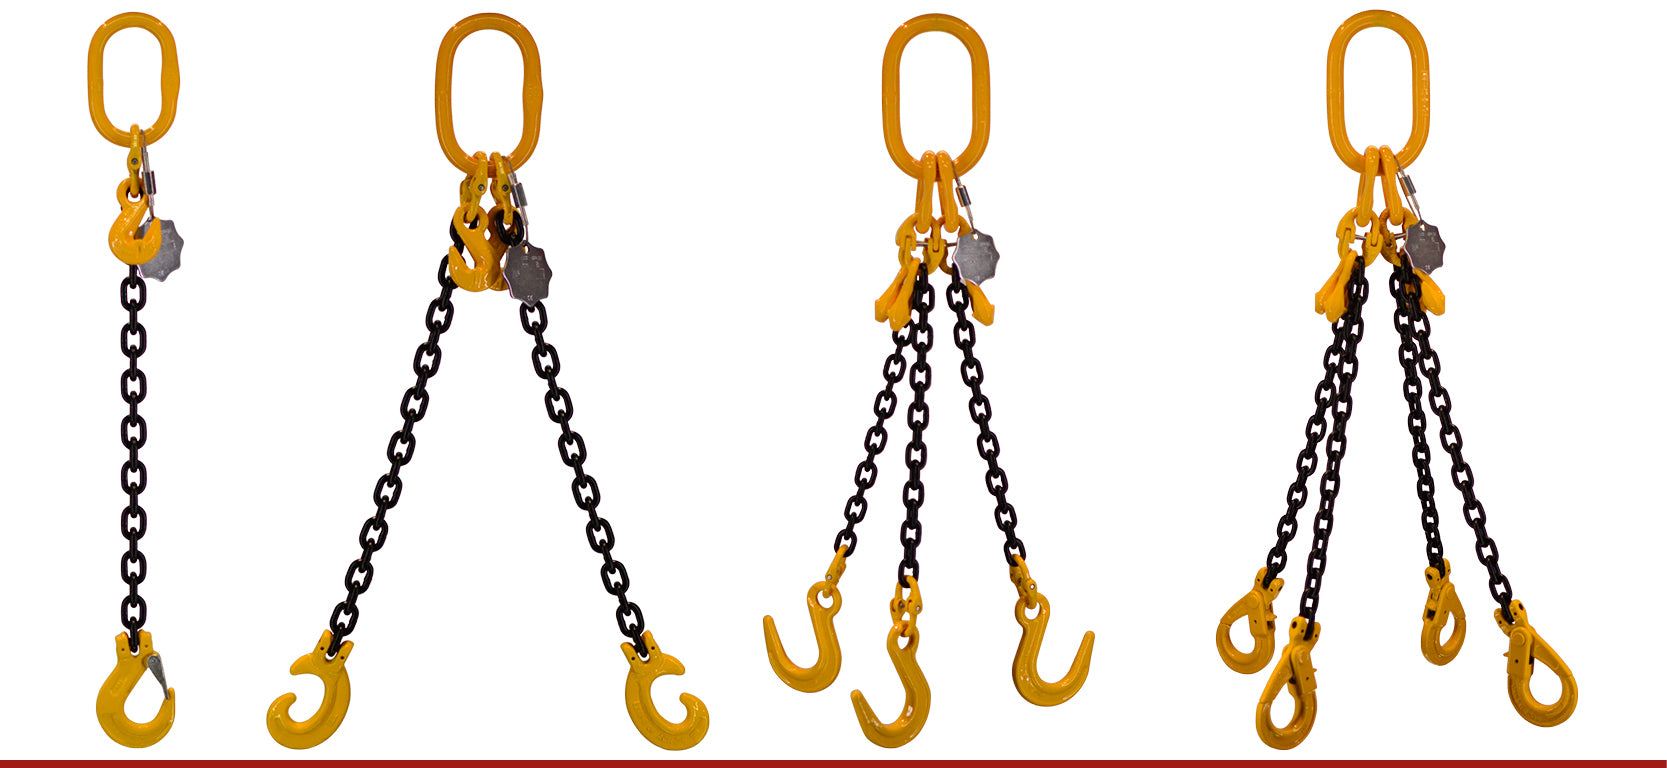 LINX-8 Grade 8 Chain Slings